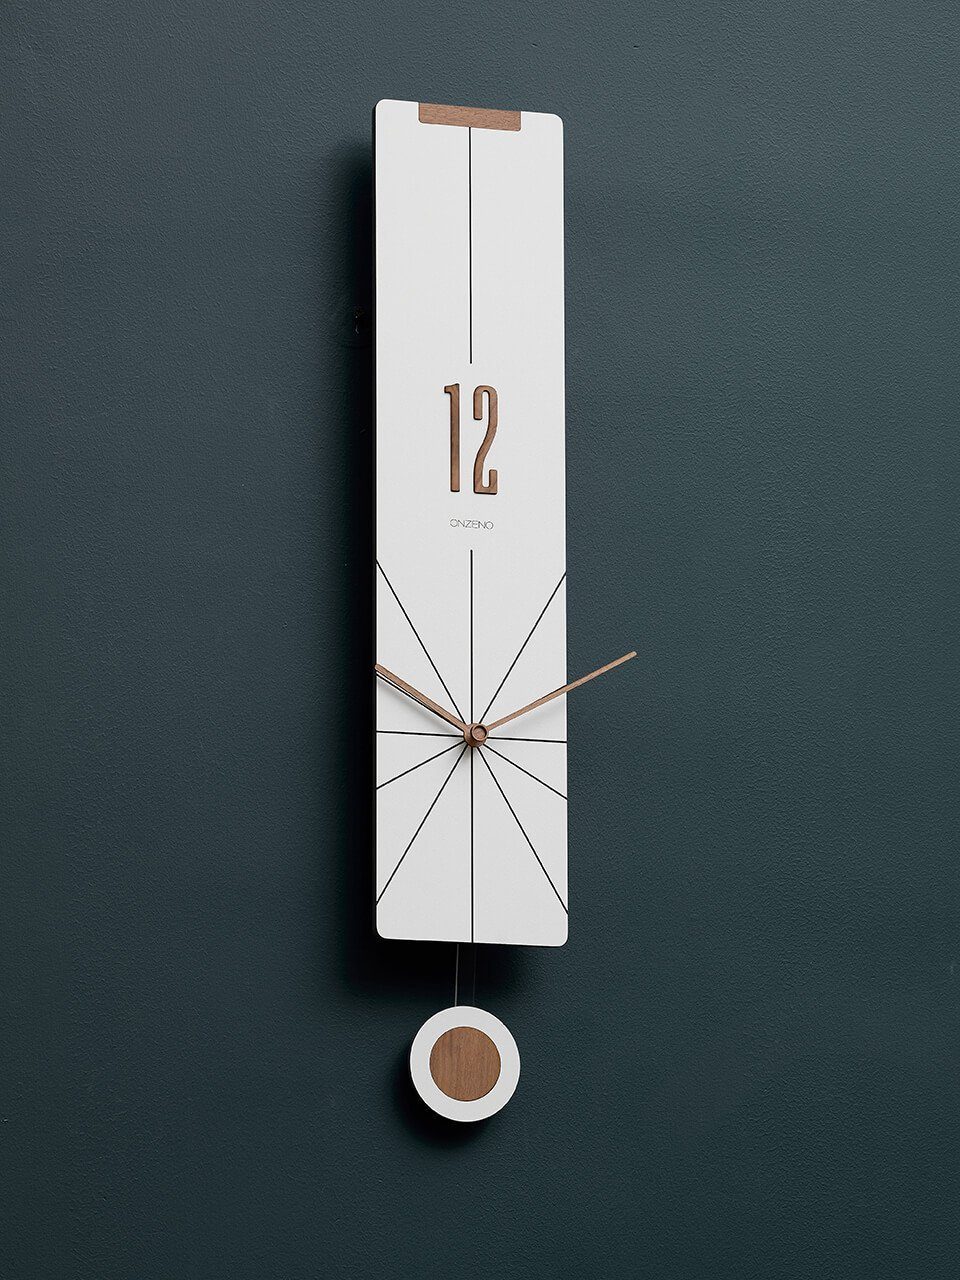 PENDULUM. ONZENO (handgefertigte Wanduhr WHITE cm THE Design-Uhr) 14x72x1.3